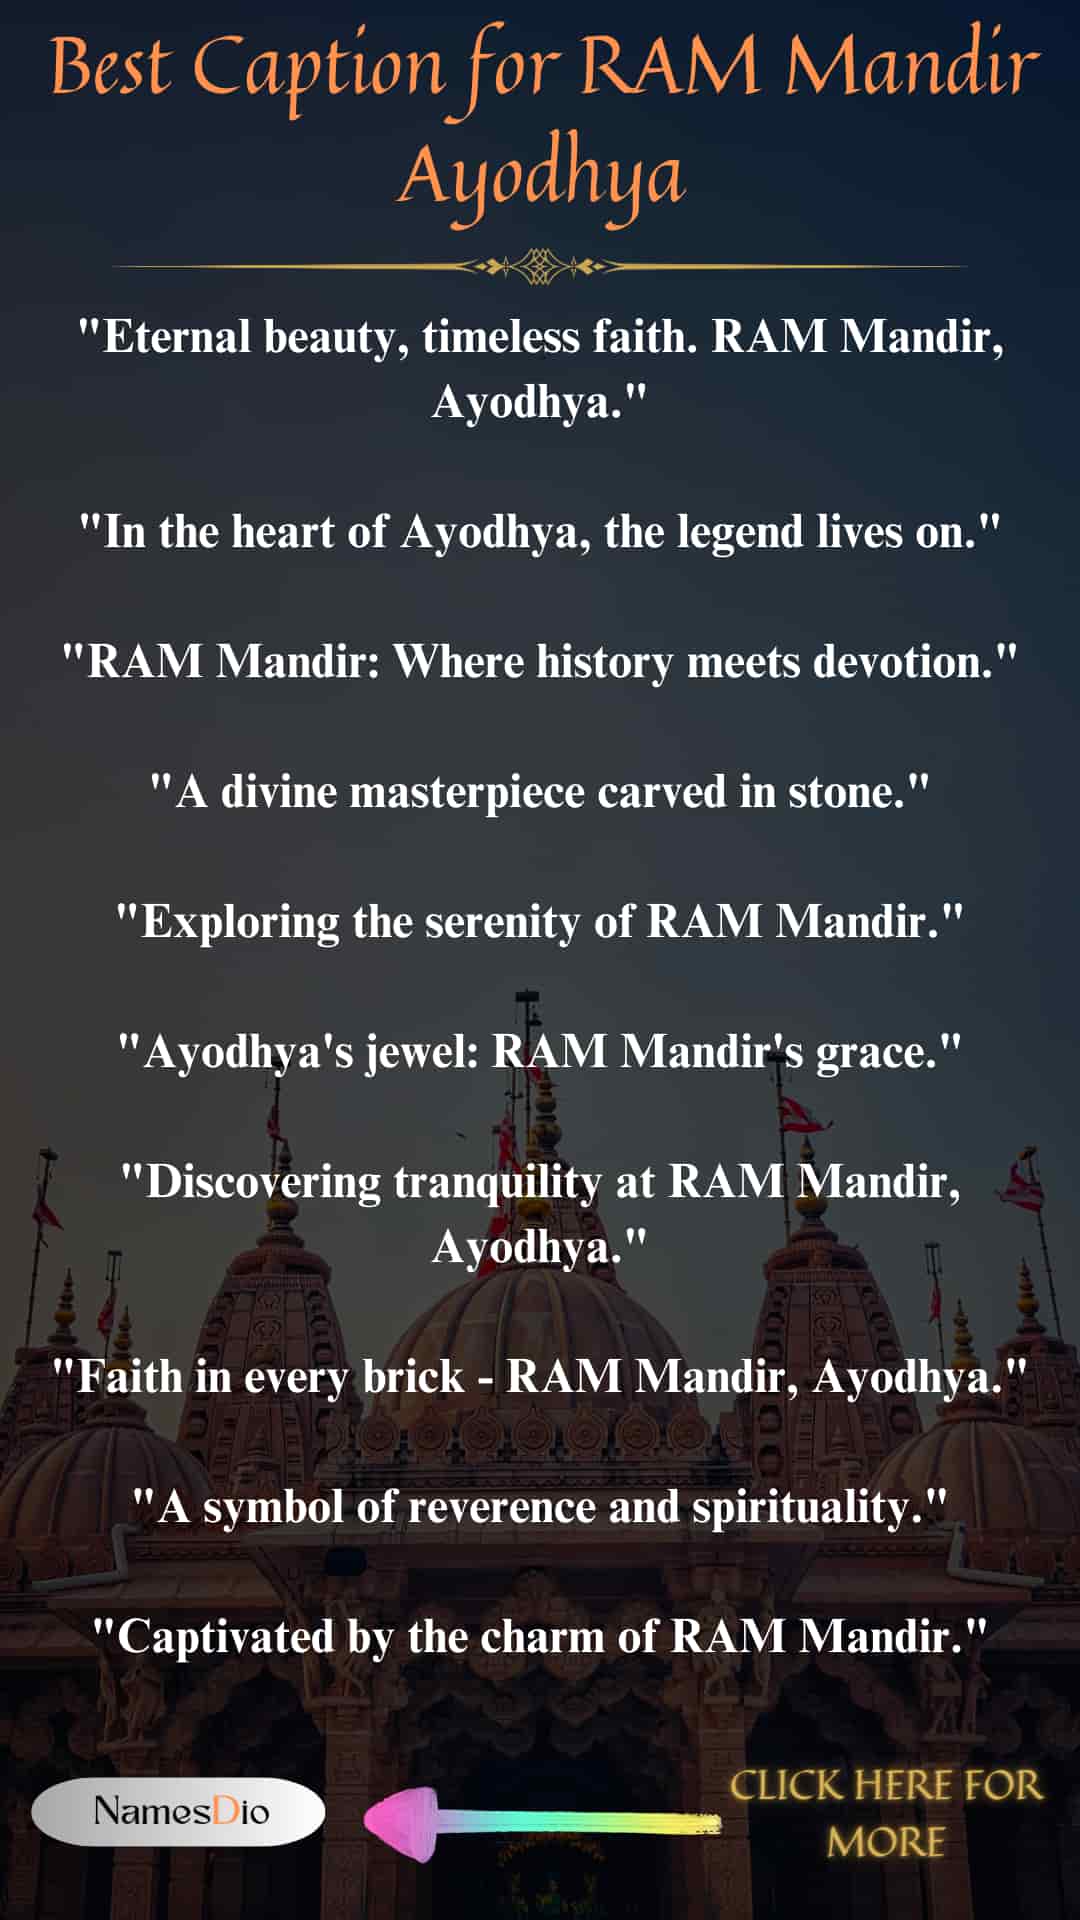 Best-Caption-for-RAM-Mandir-Ayodhya